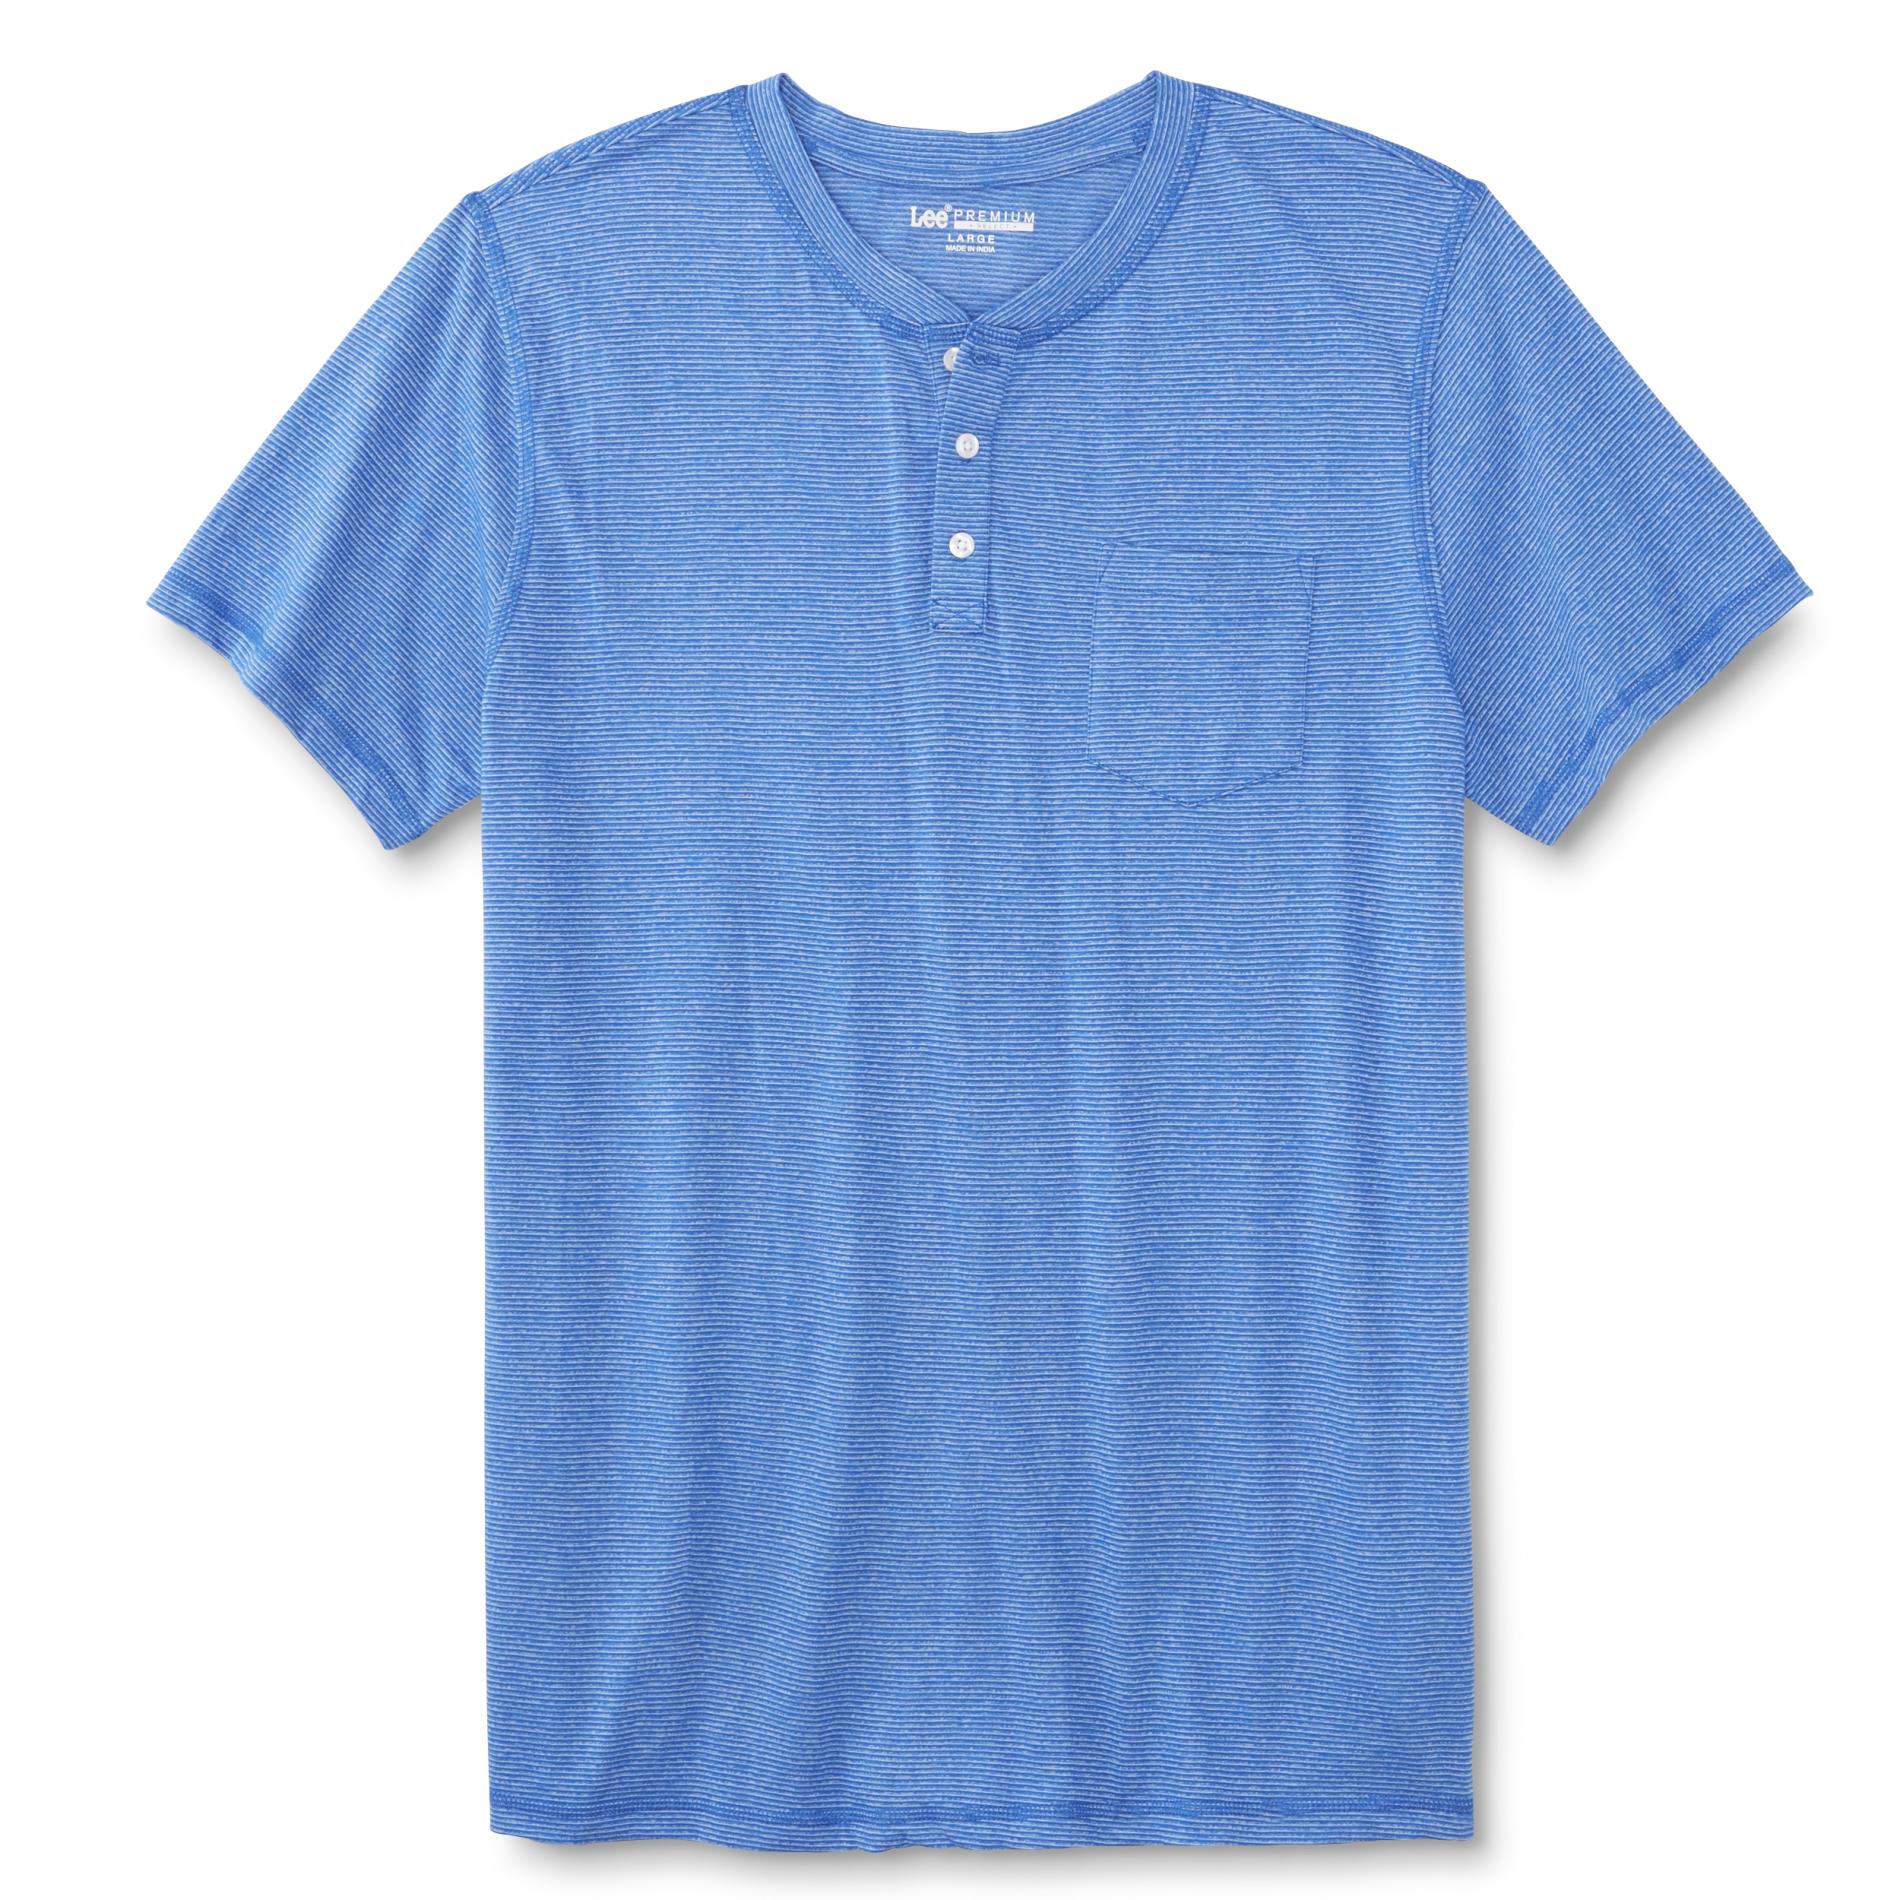 LEE Men's Premium Select Pocket Henley Shirt - Striped